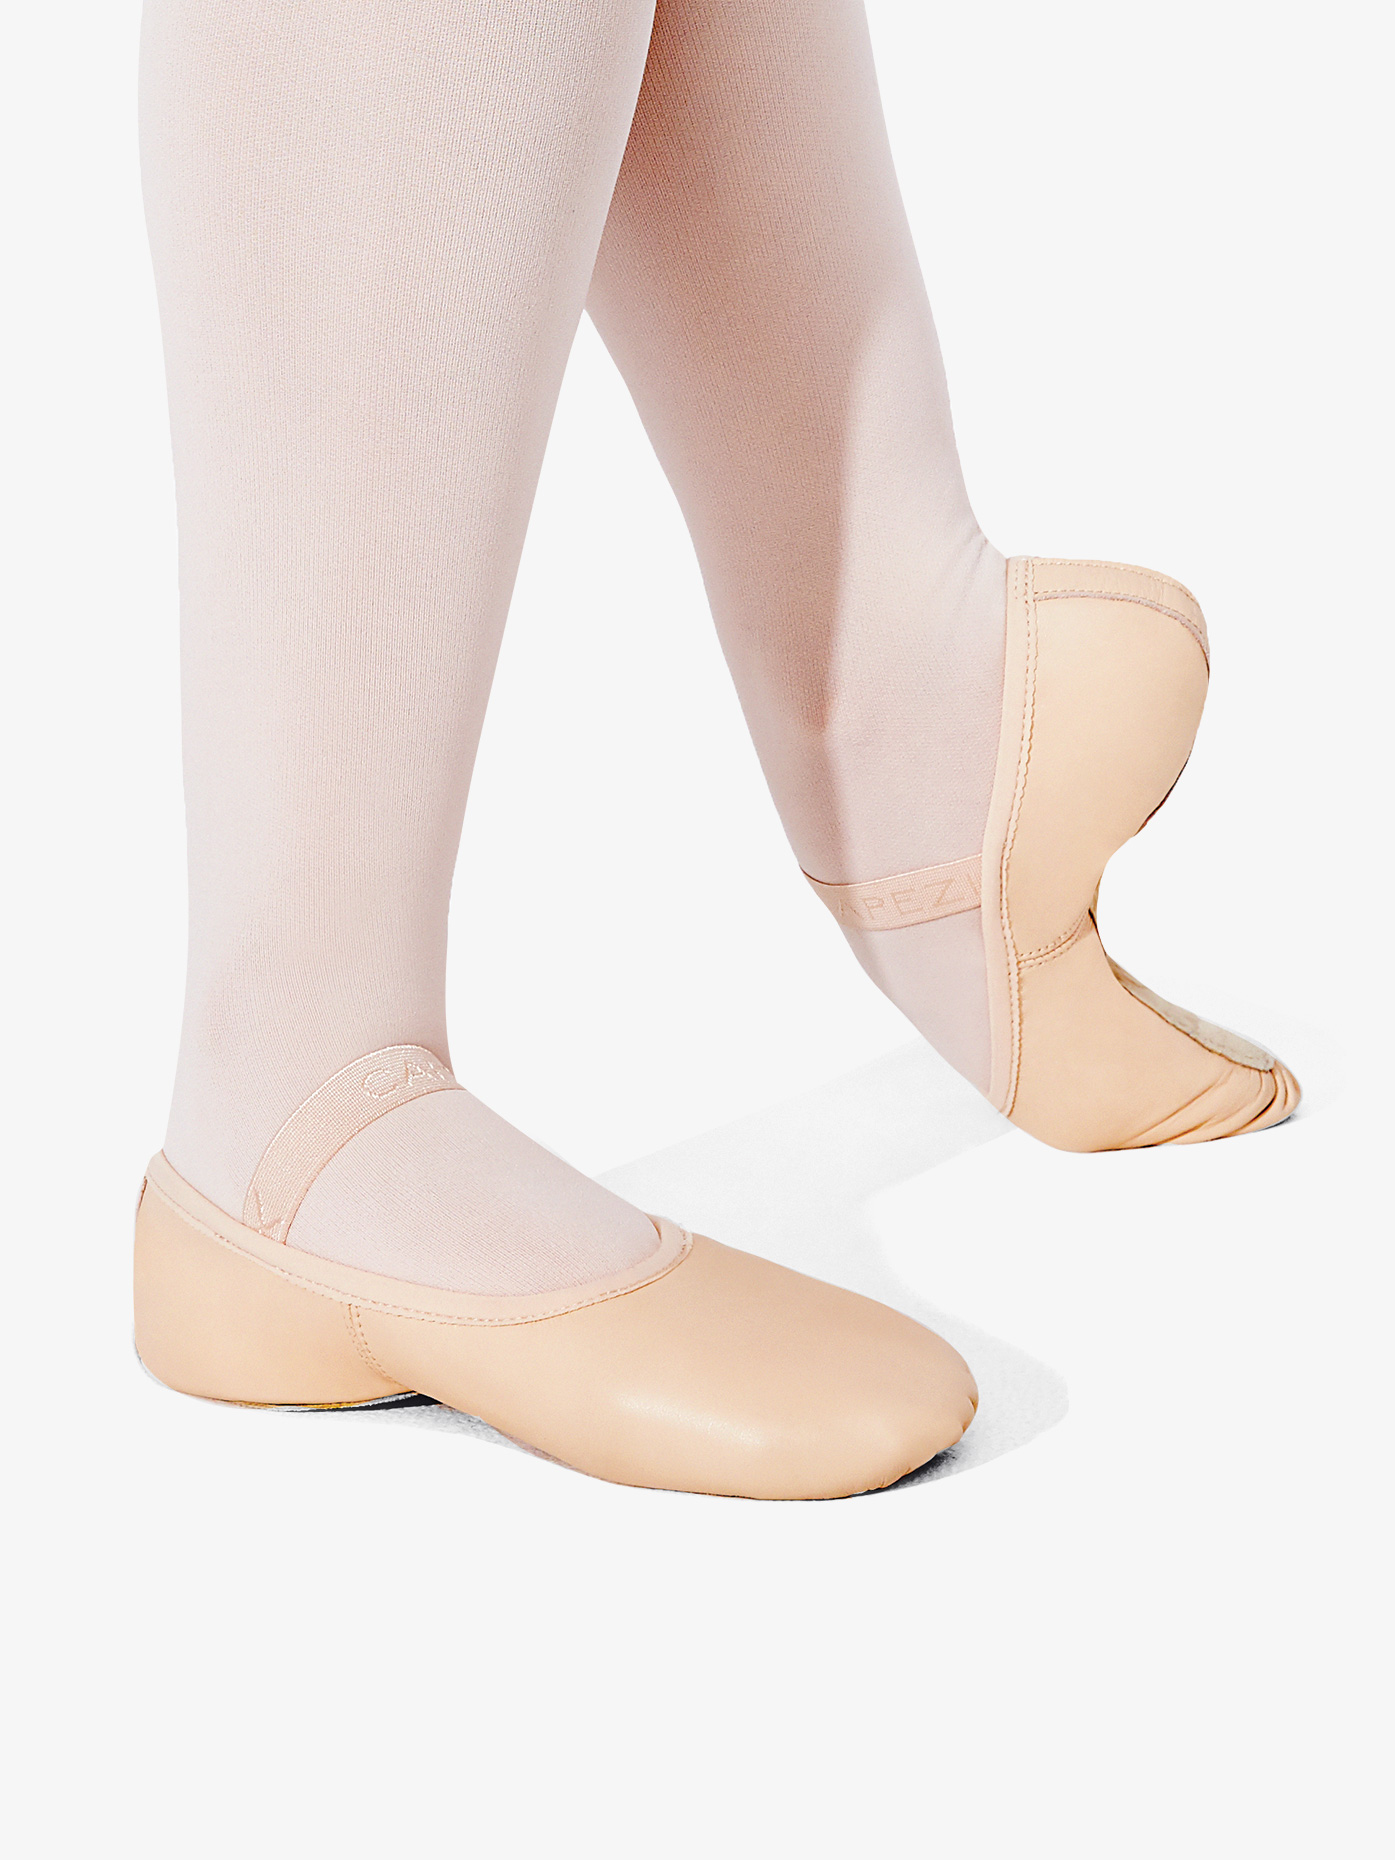 Ballet Slipper Size Chart